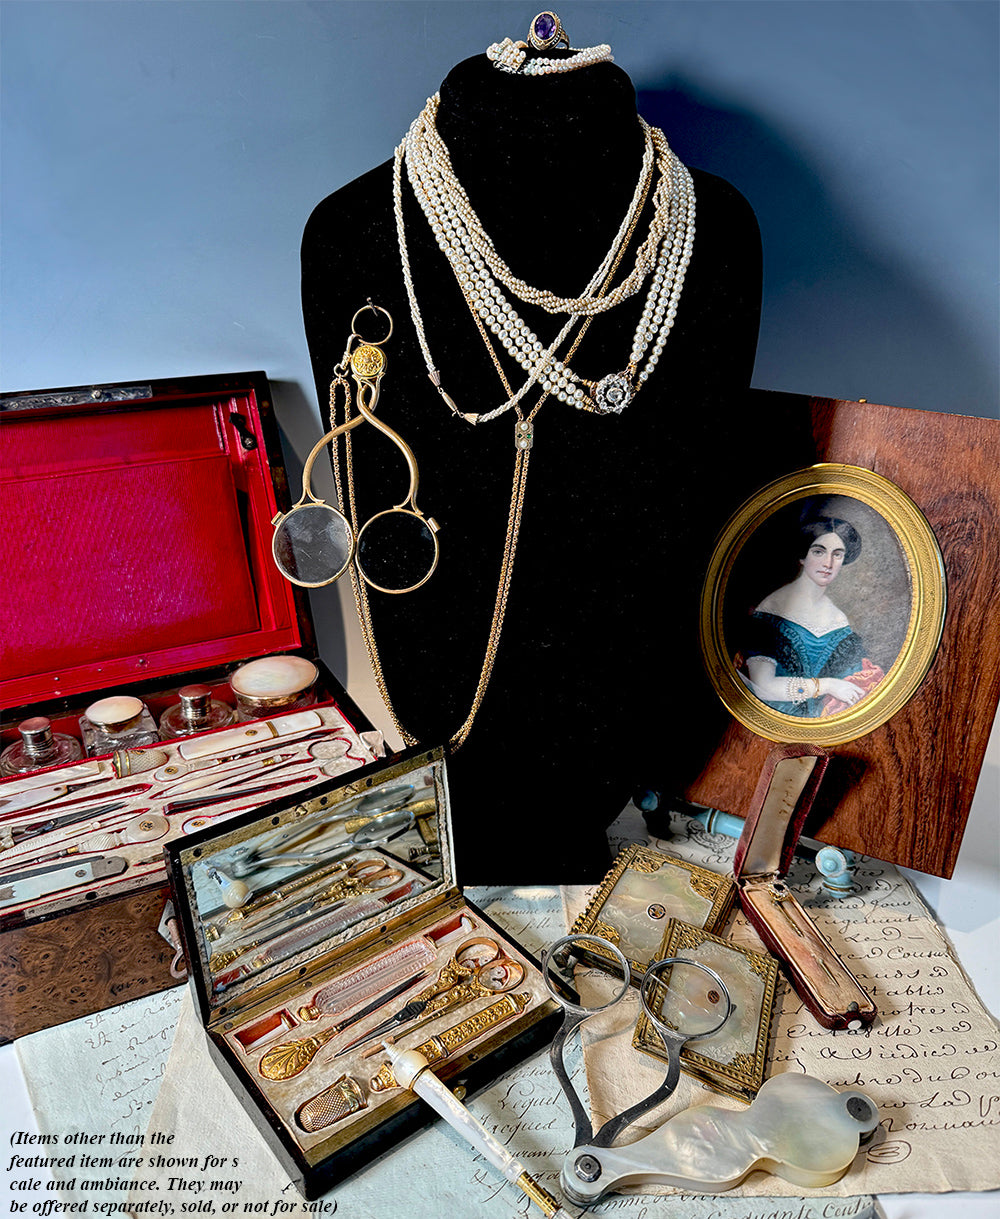 Antique Mine Cut 5mm Sapphire and Diamonds 14k Stick Pin, Brooch in Original Presentation Box